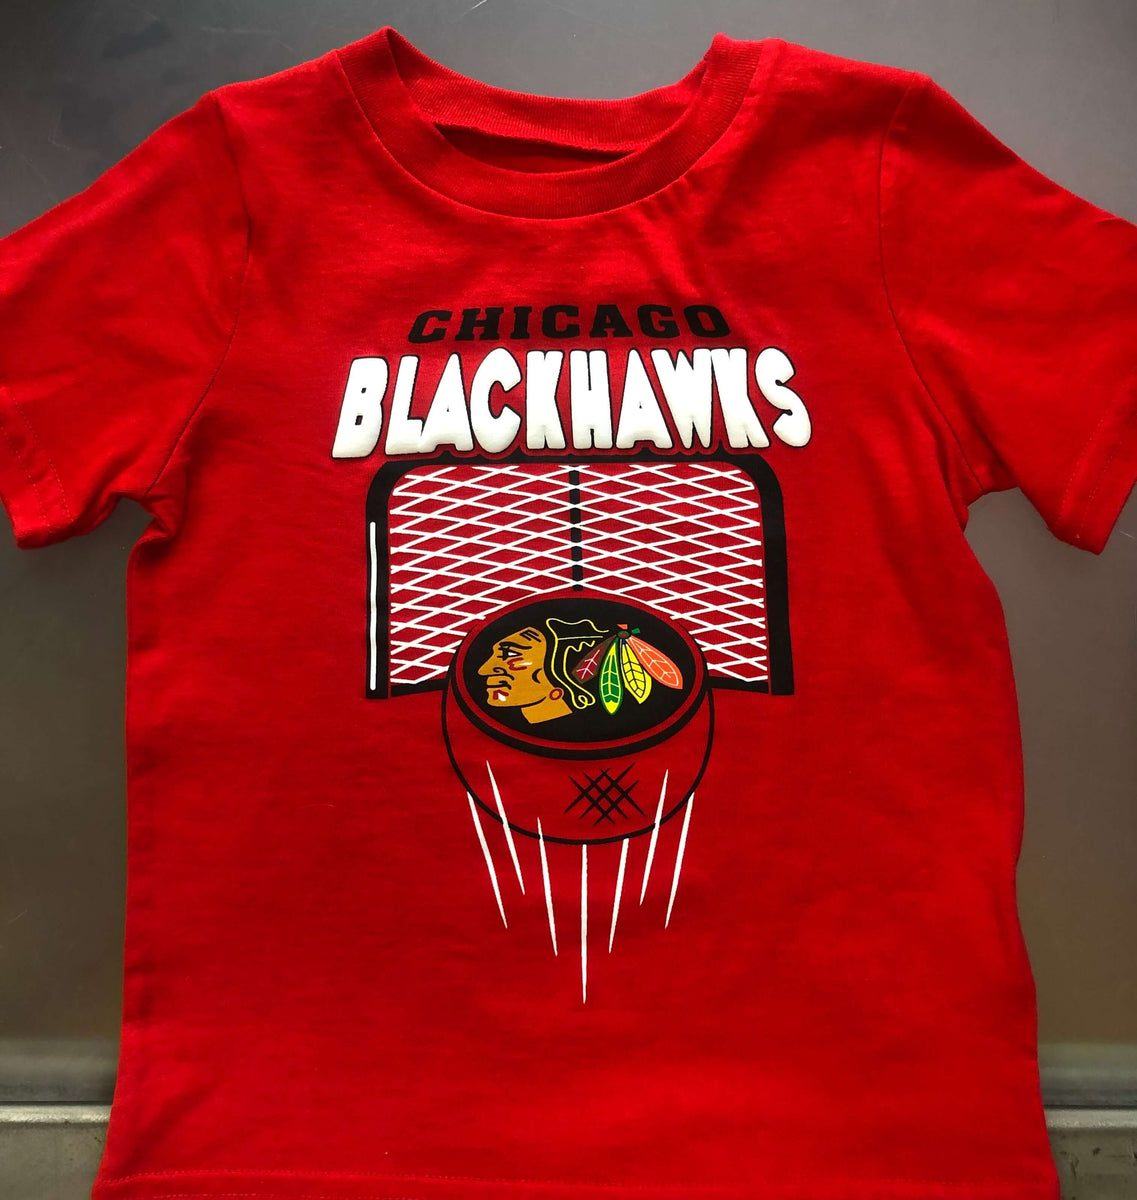 Lot of 2 Kids' Chicago Blackhawks Shirts, Size S